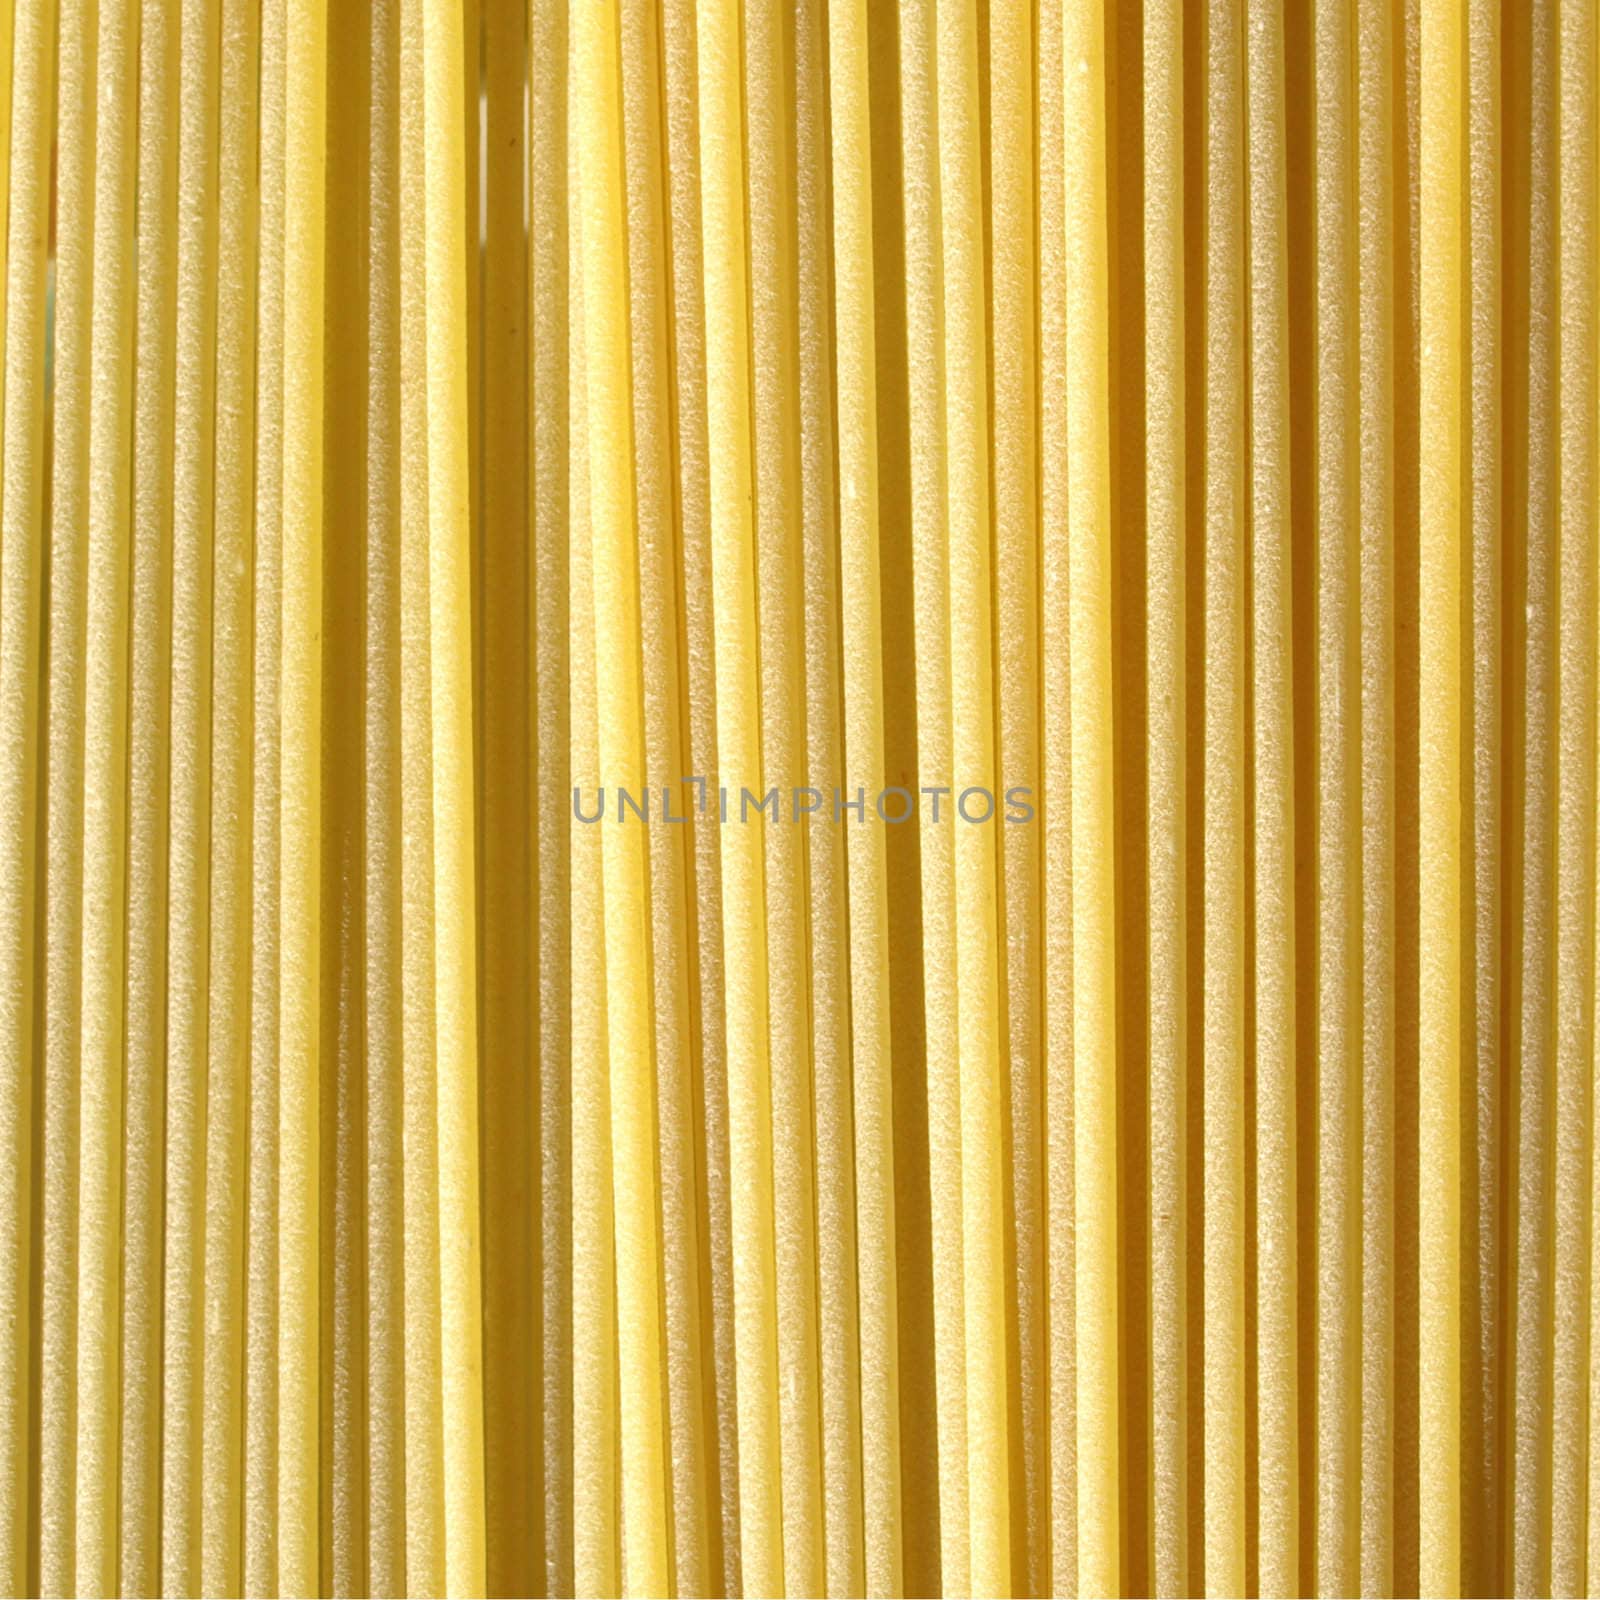 Spaghetti pasta Italian cuisine food